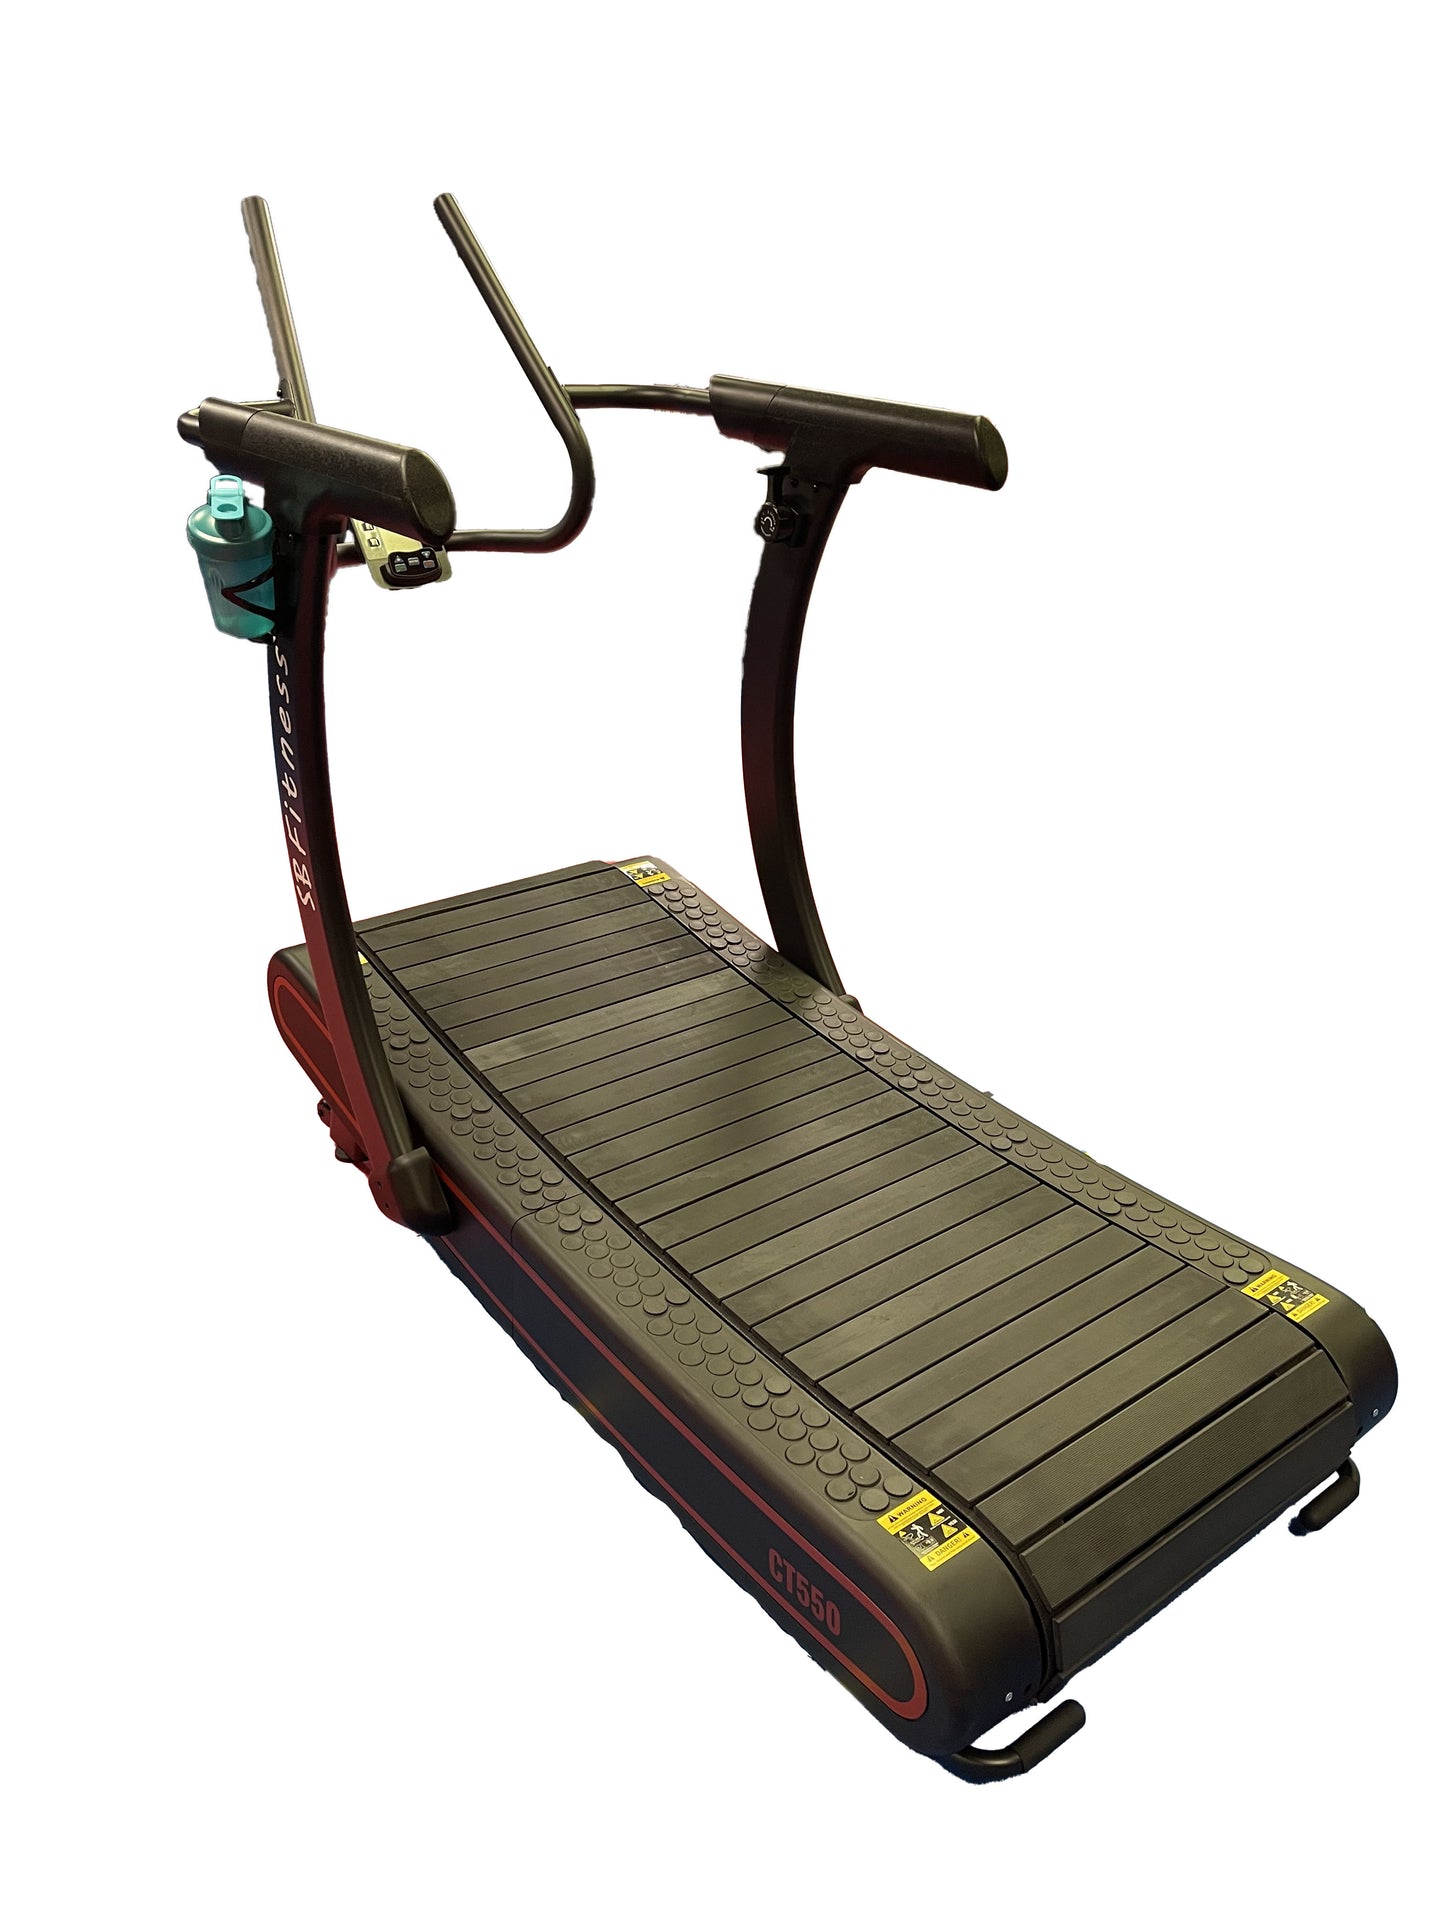 SB Fitness CT550 Self Generated Curved Treadmill